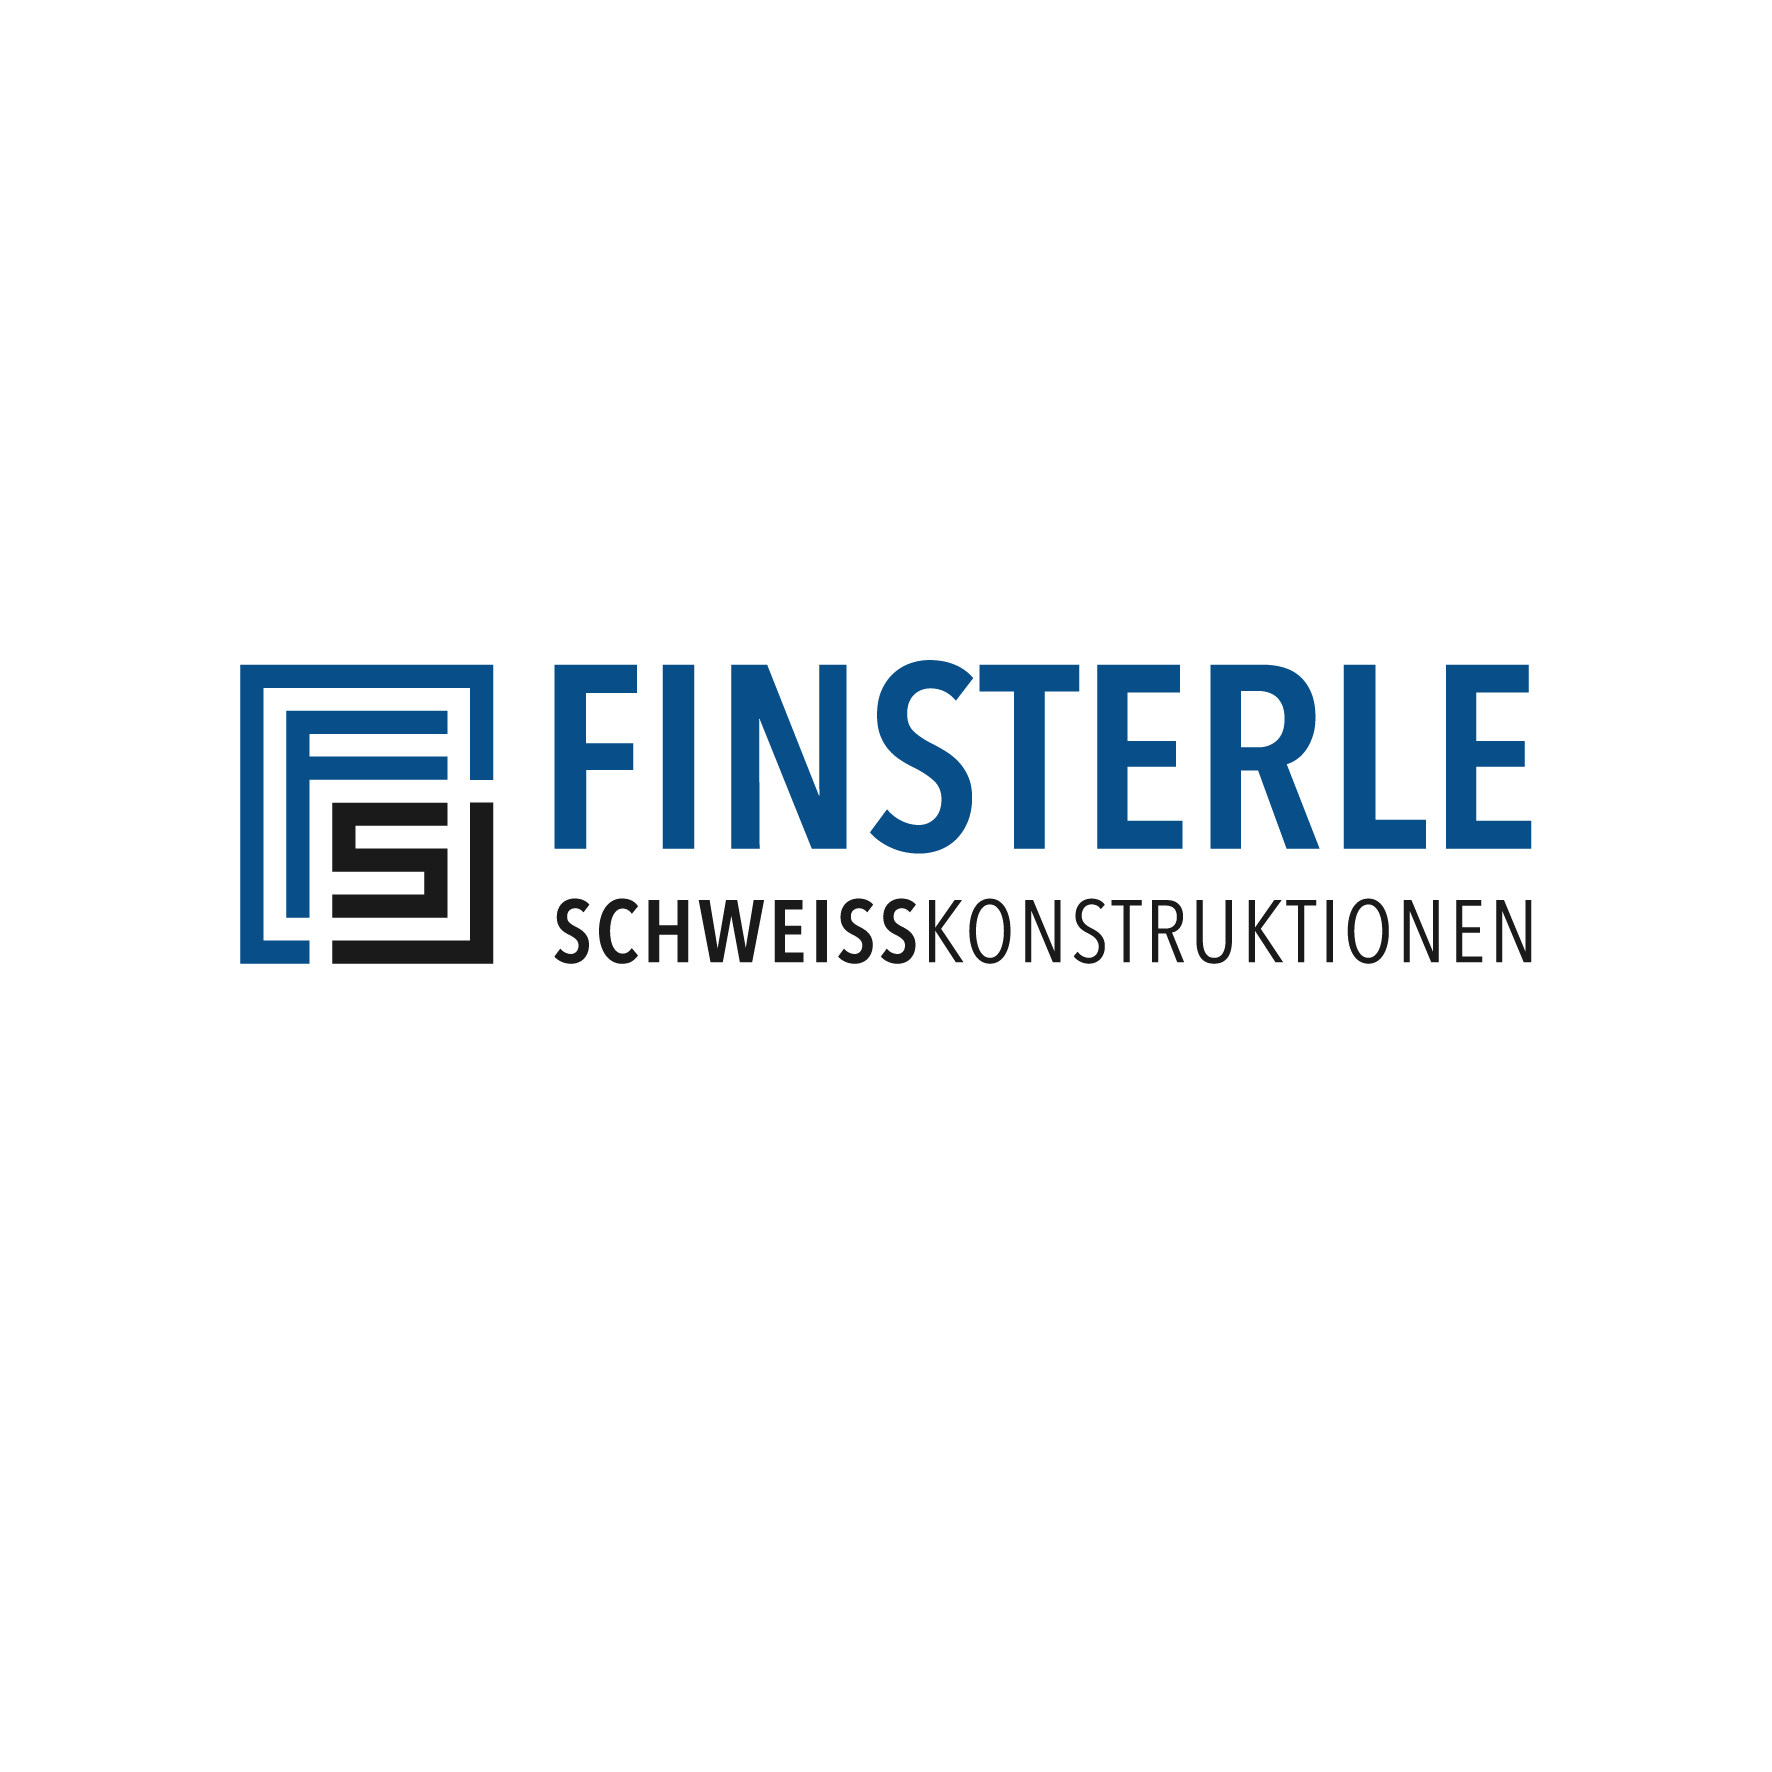 Finsterle GmbH